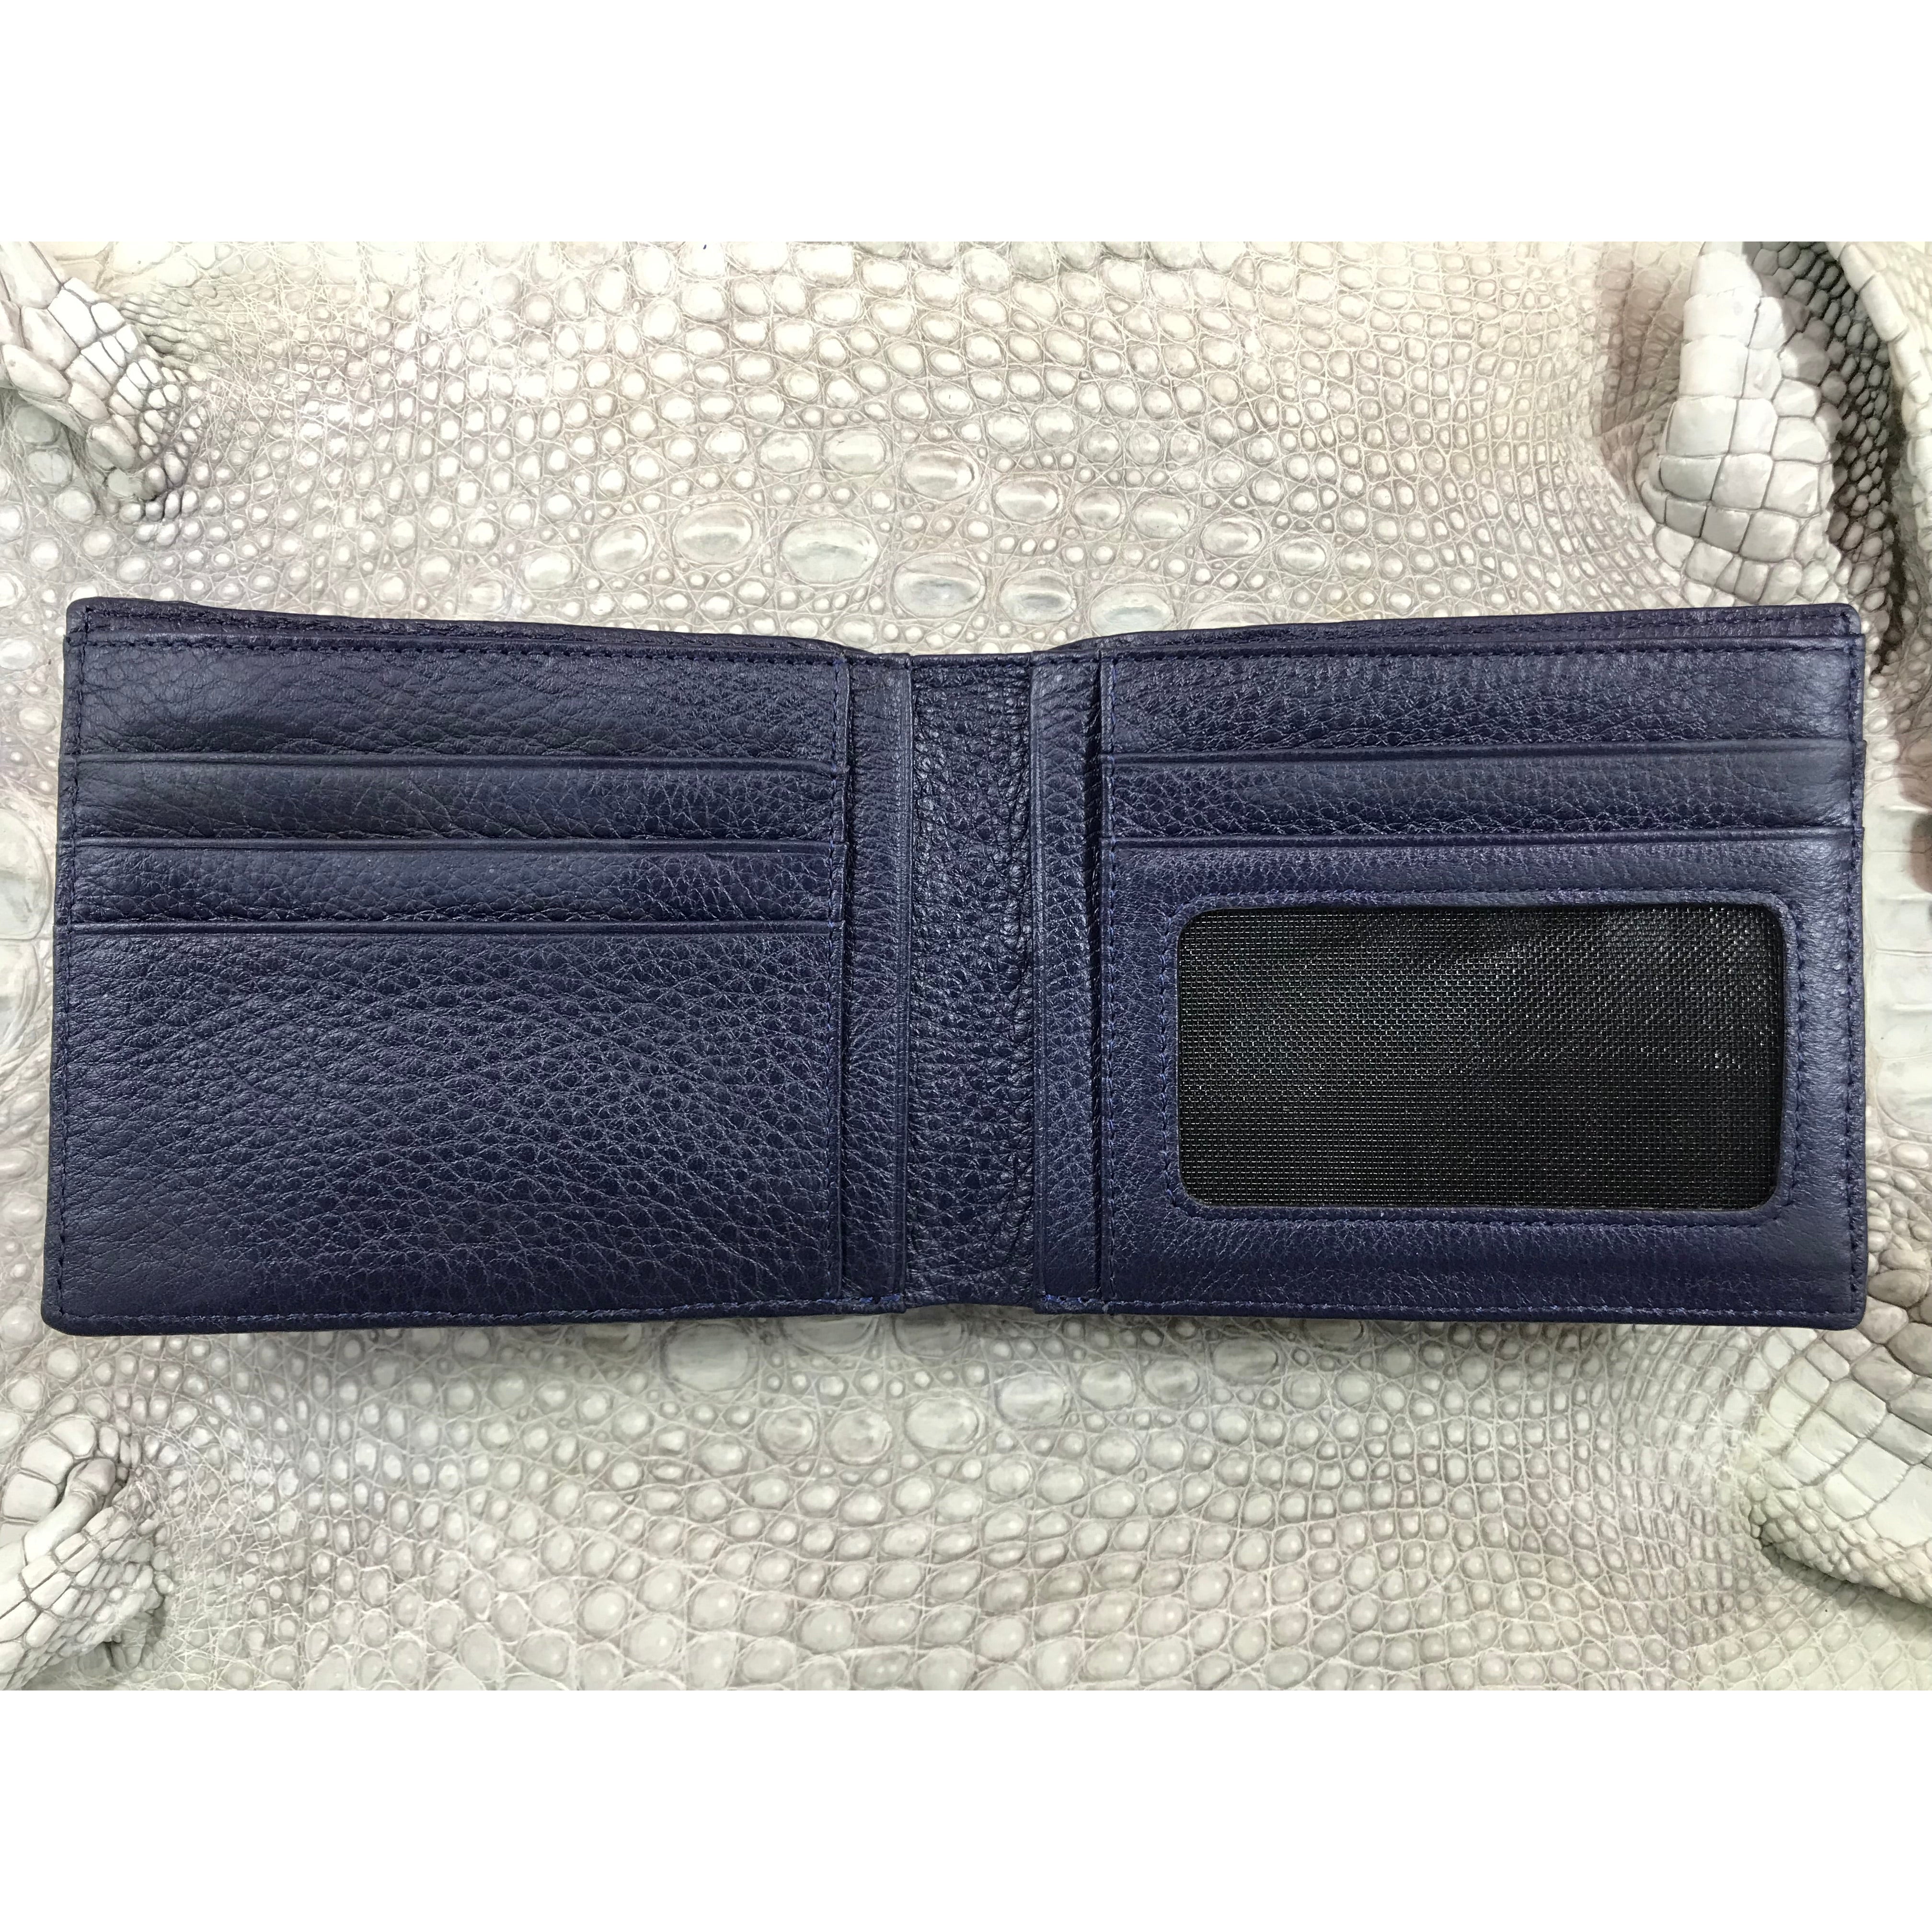 Blue Alligator Skin Bifold Wallet For Men | Handmade Crocodile Leather Wallet RFID Blocking | VL5623 - Vinacreations